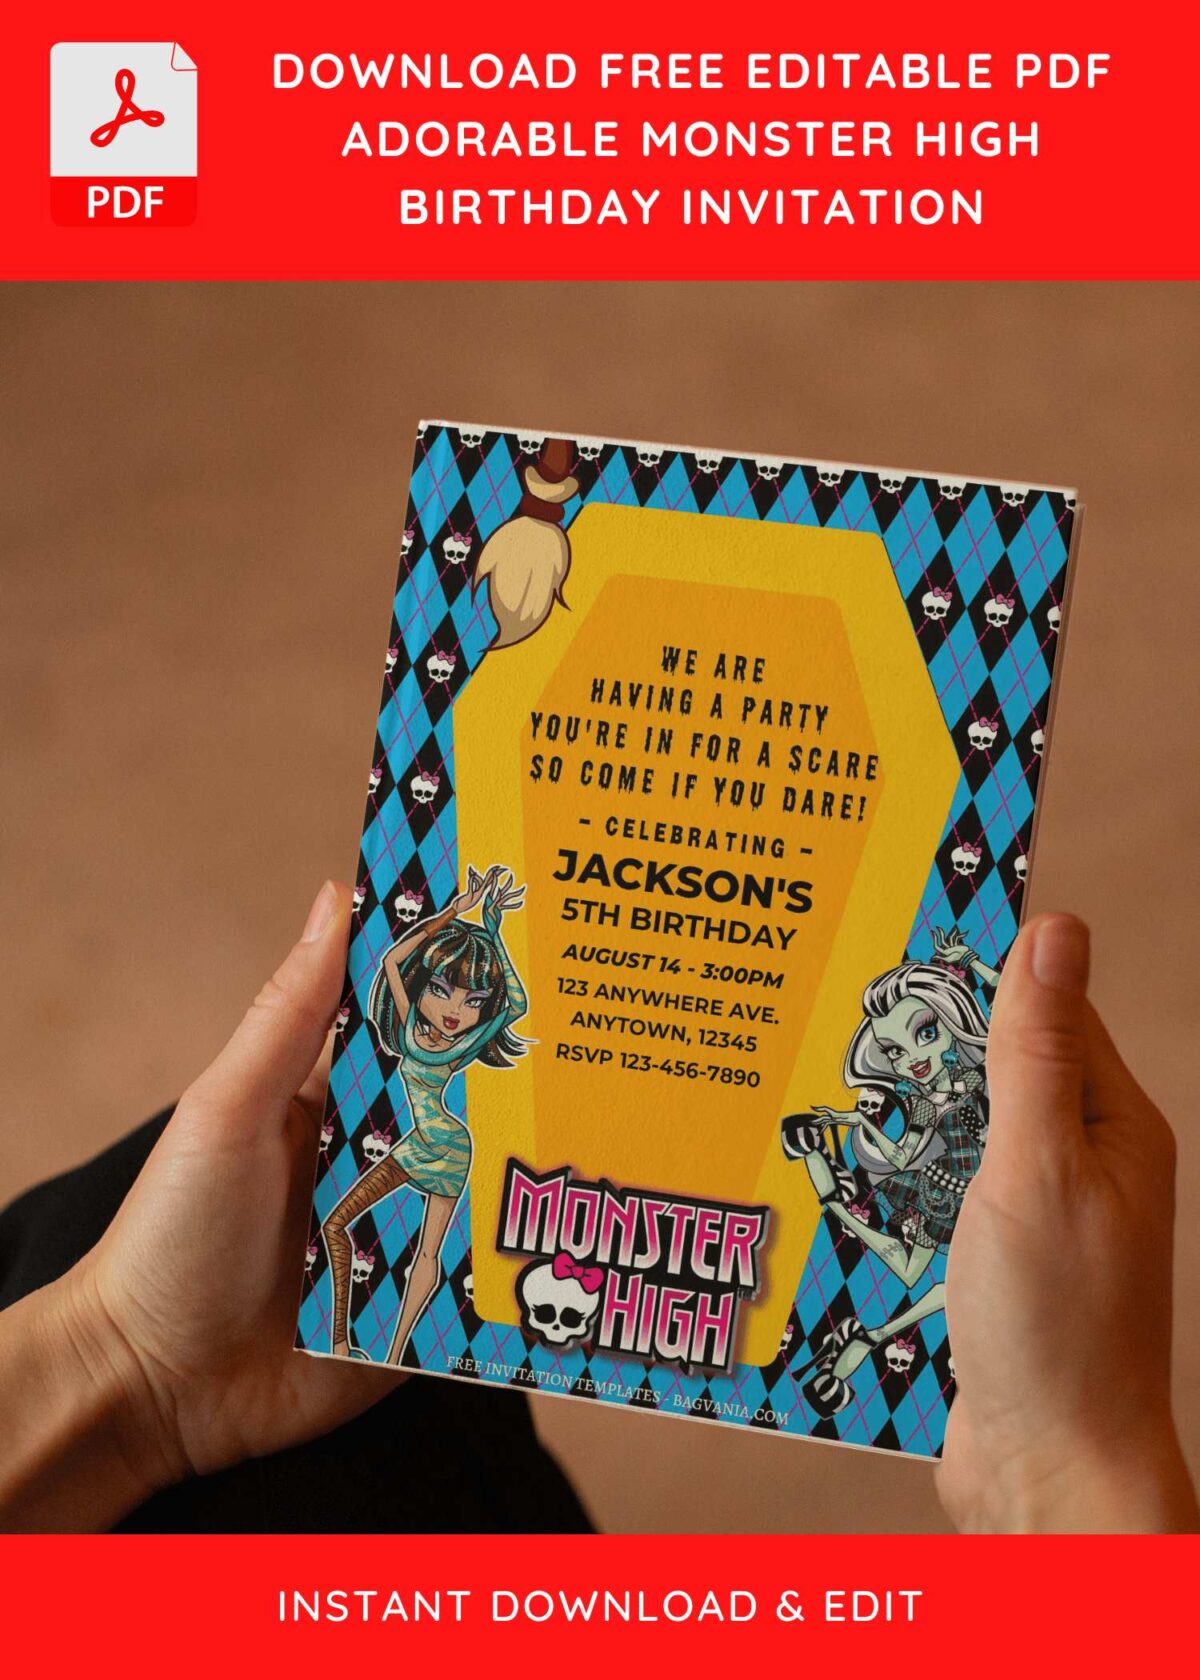 (Free Editable PDF) Lovely Monster High Birthday Invitation Templates E